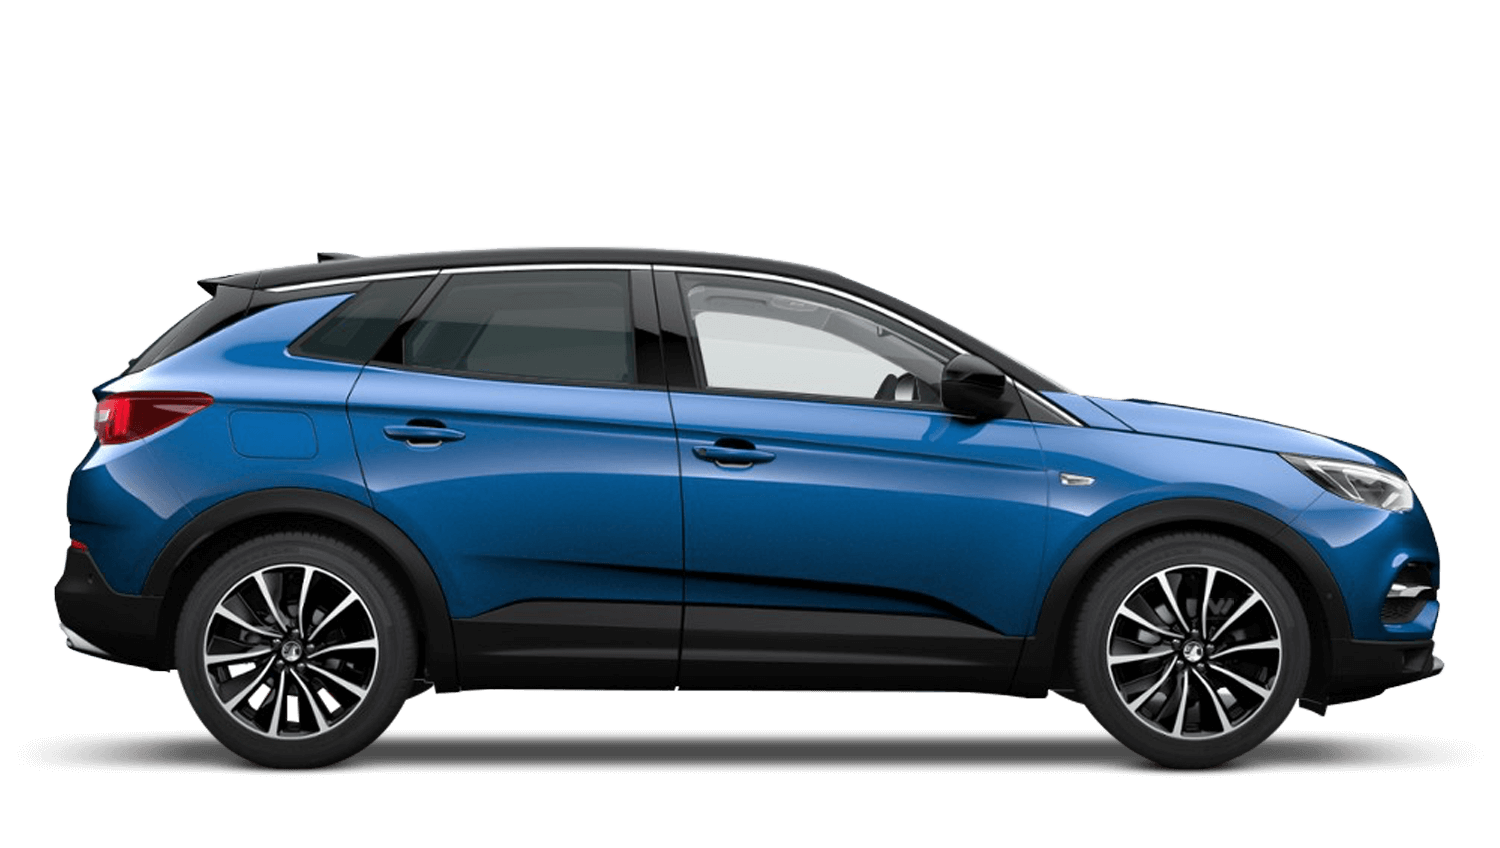 Topaz Blue (Premium Metallic) Vauxhall Grandland X